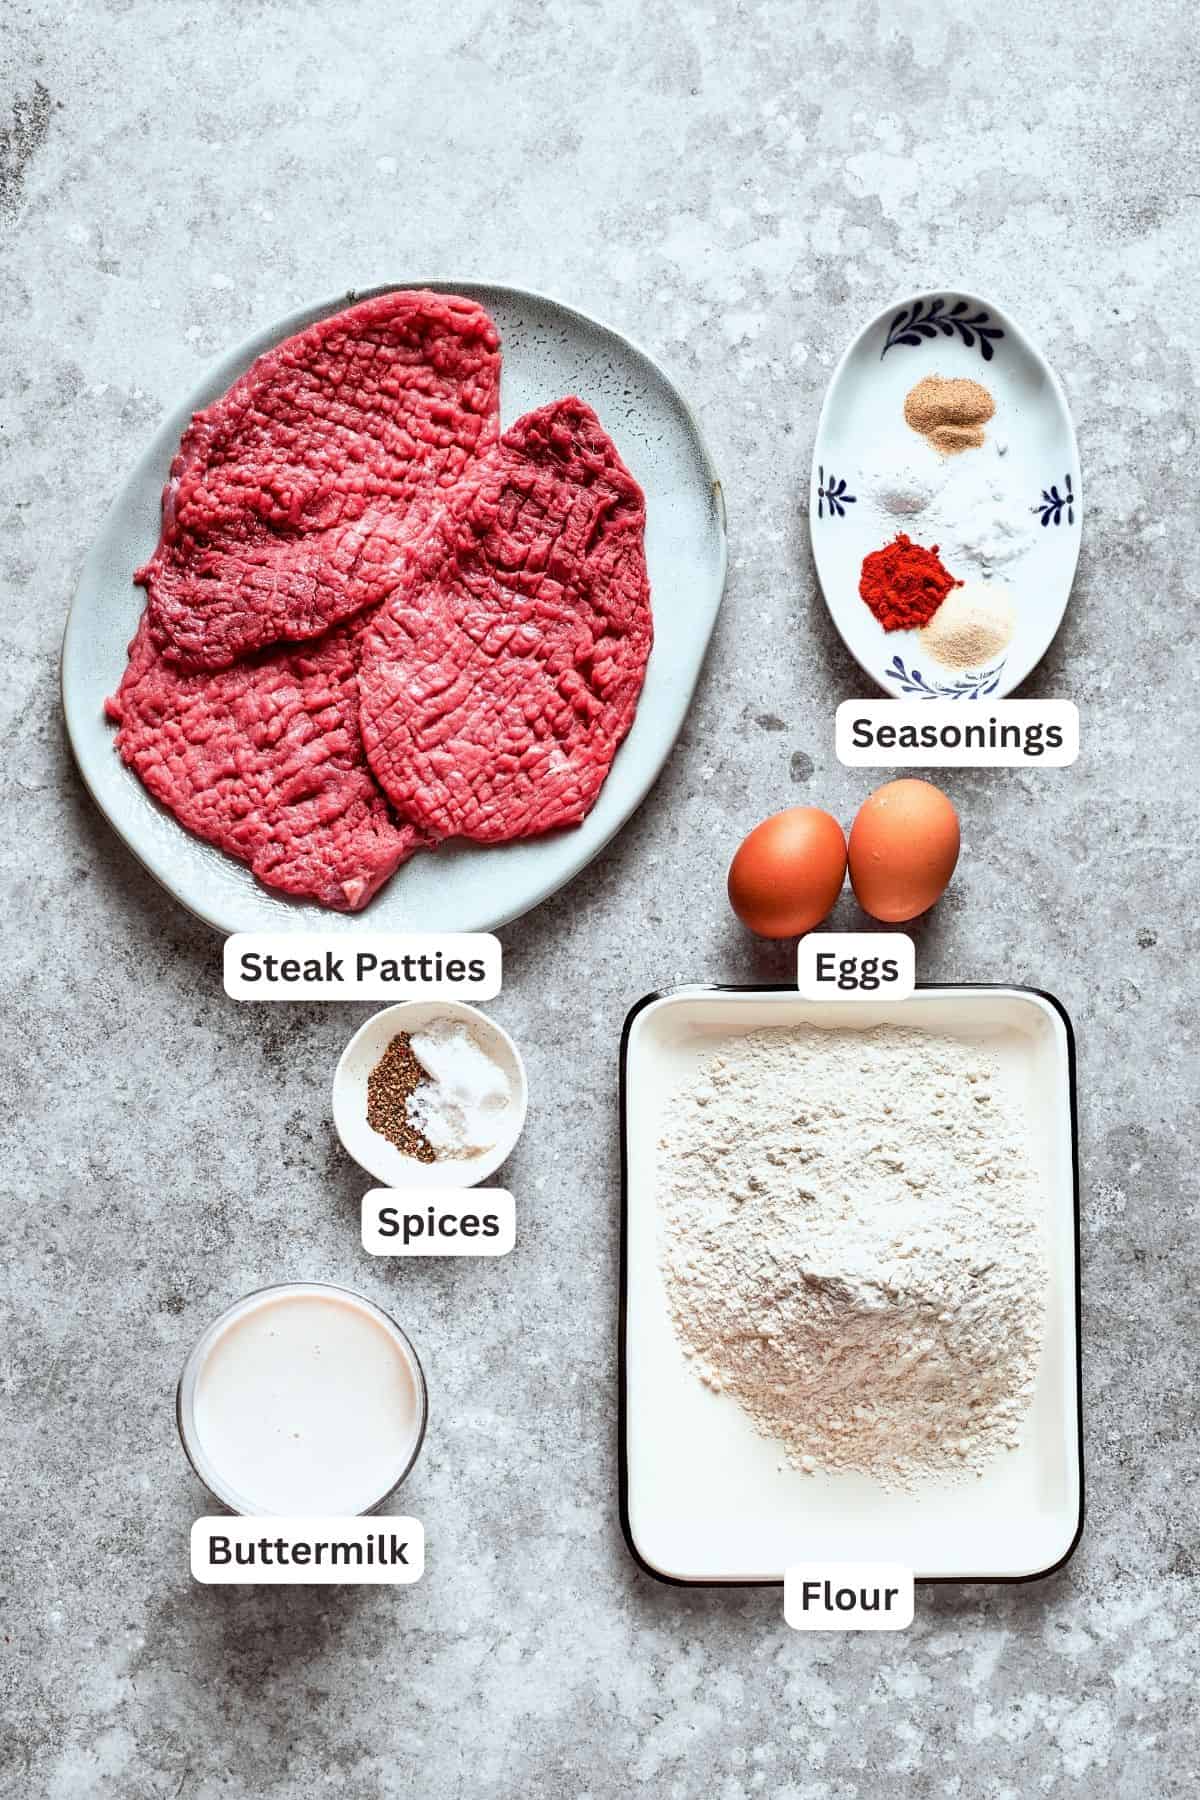 Chicken fried steak ingredients are labeled: steak, eggs, seasonings, flour, spices.